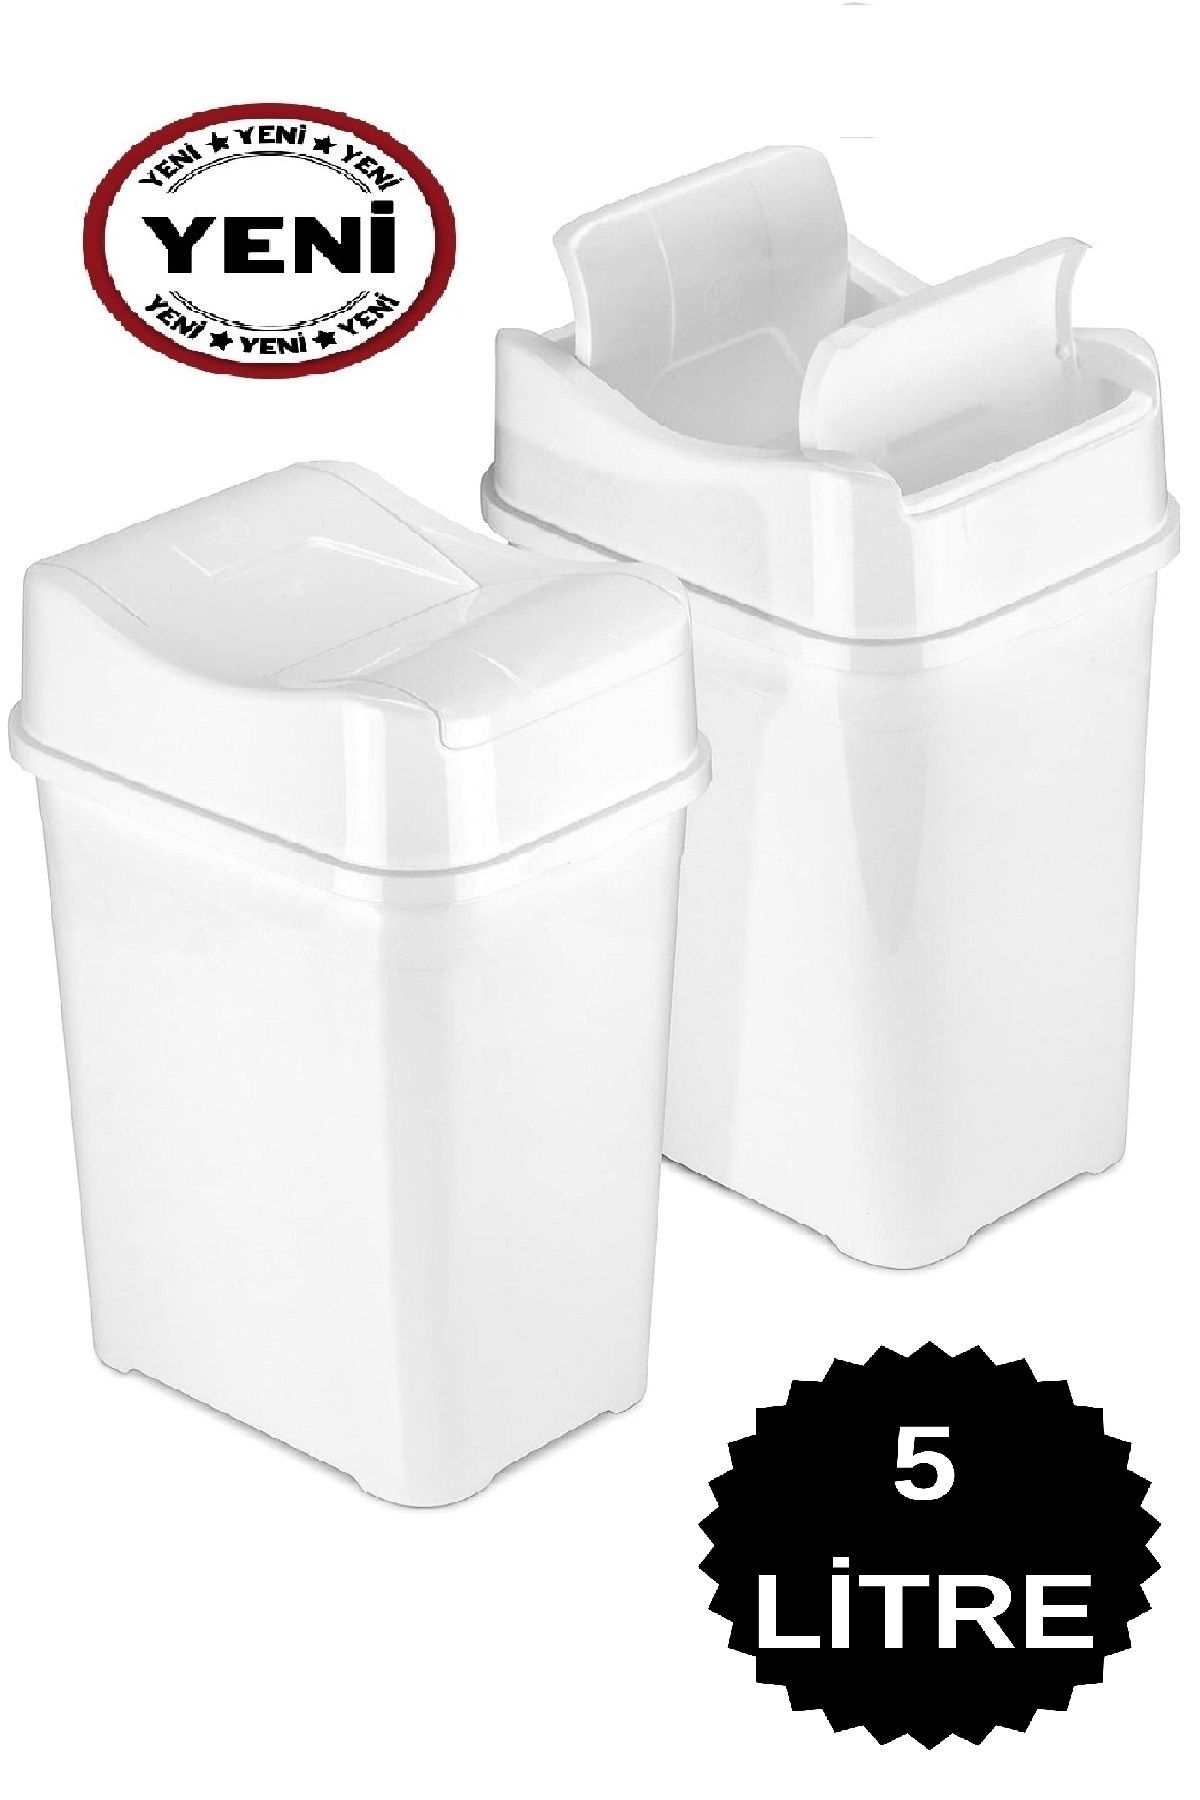 DEEMBRO Çöp kovası 5 Litre  Masa Üstü Mutfak Tezgah Üstü Banyo Ofis Çift Kapaklı beyaz 1. kalite malzeme